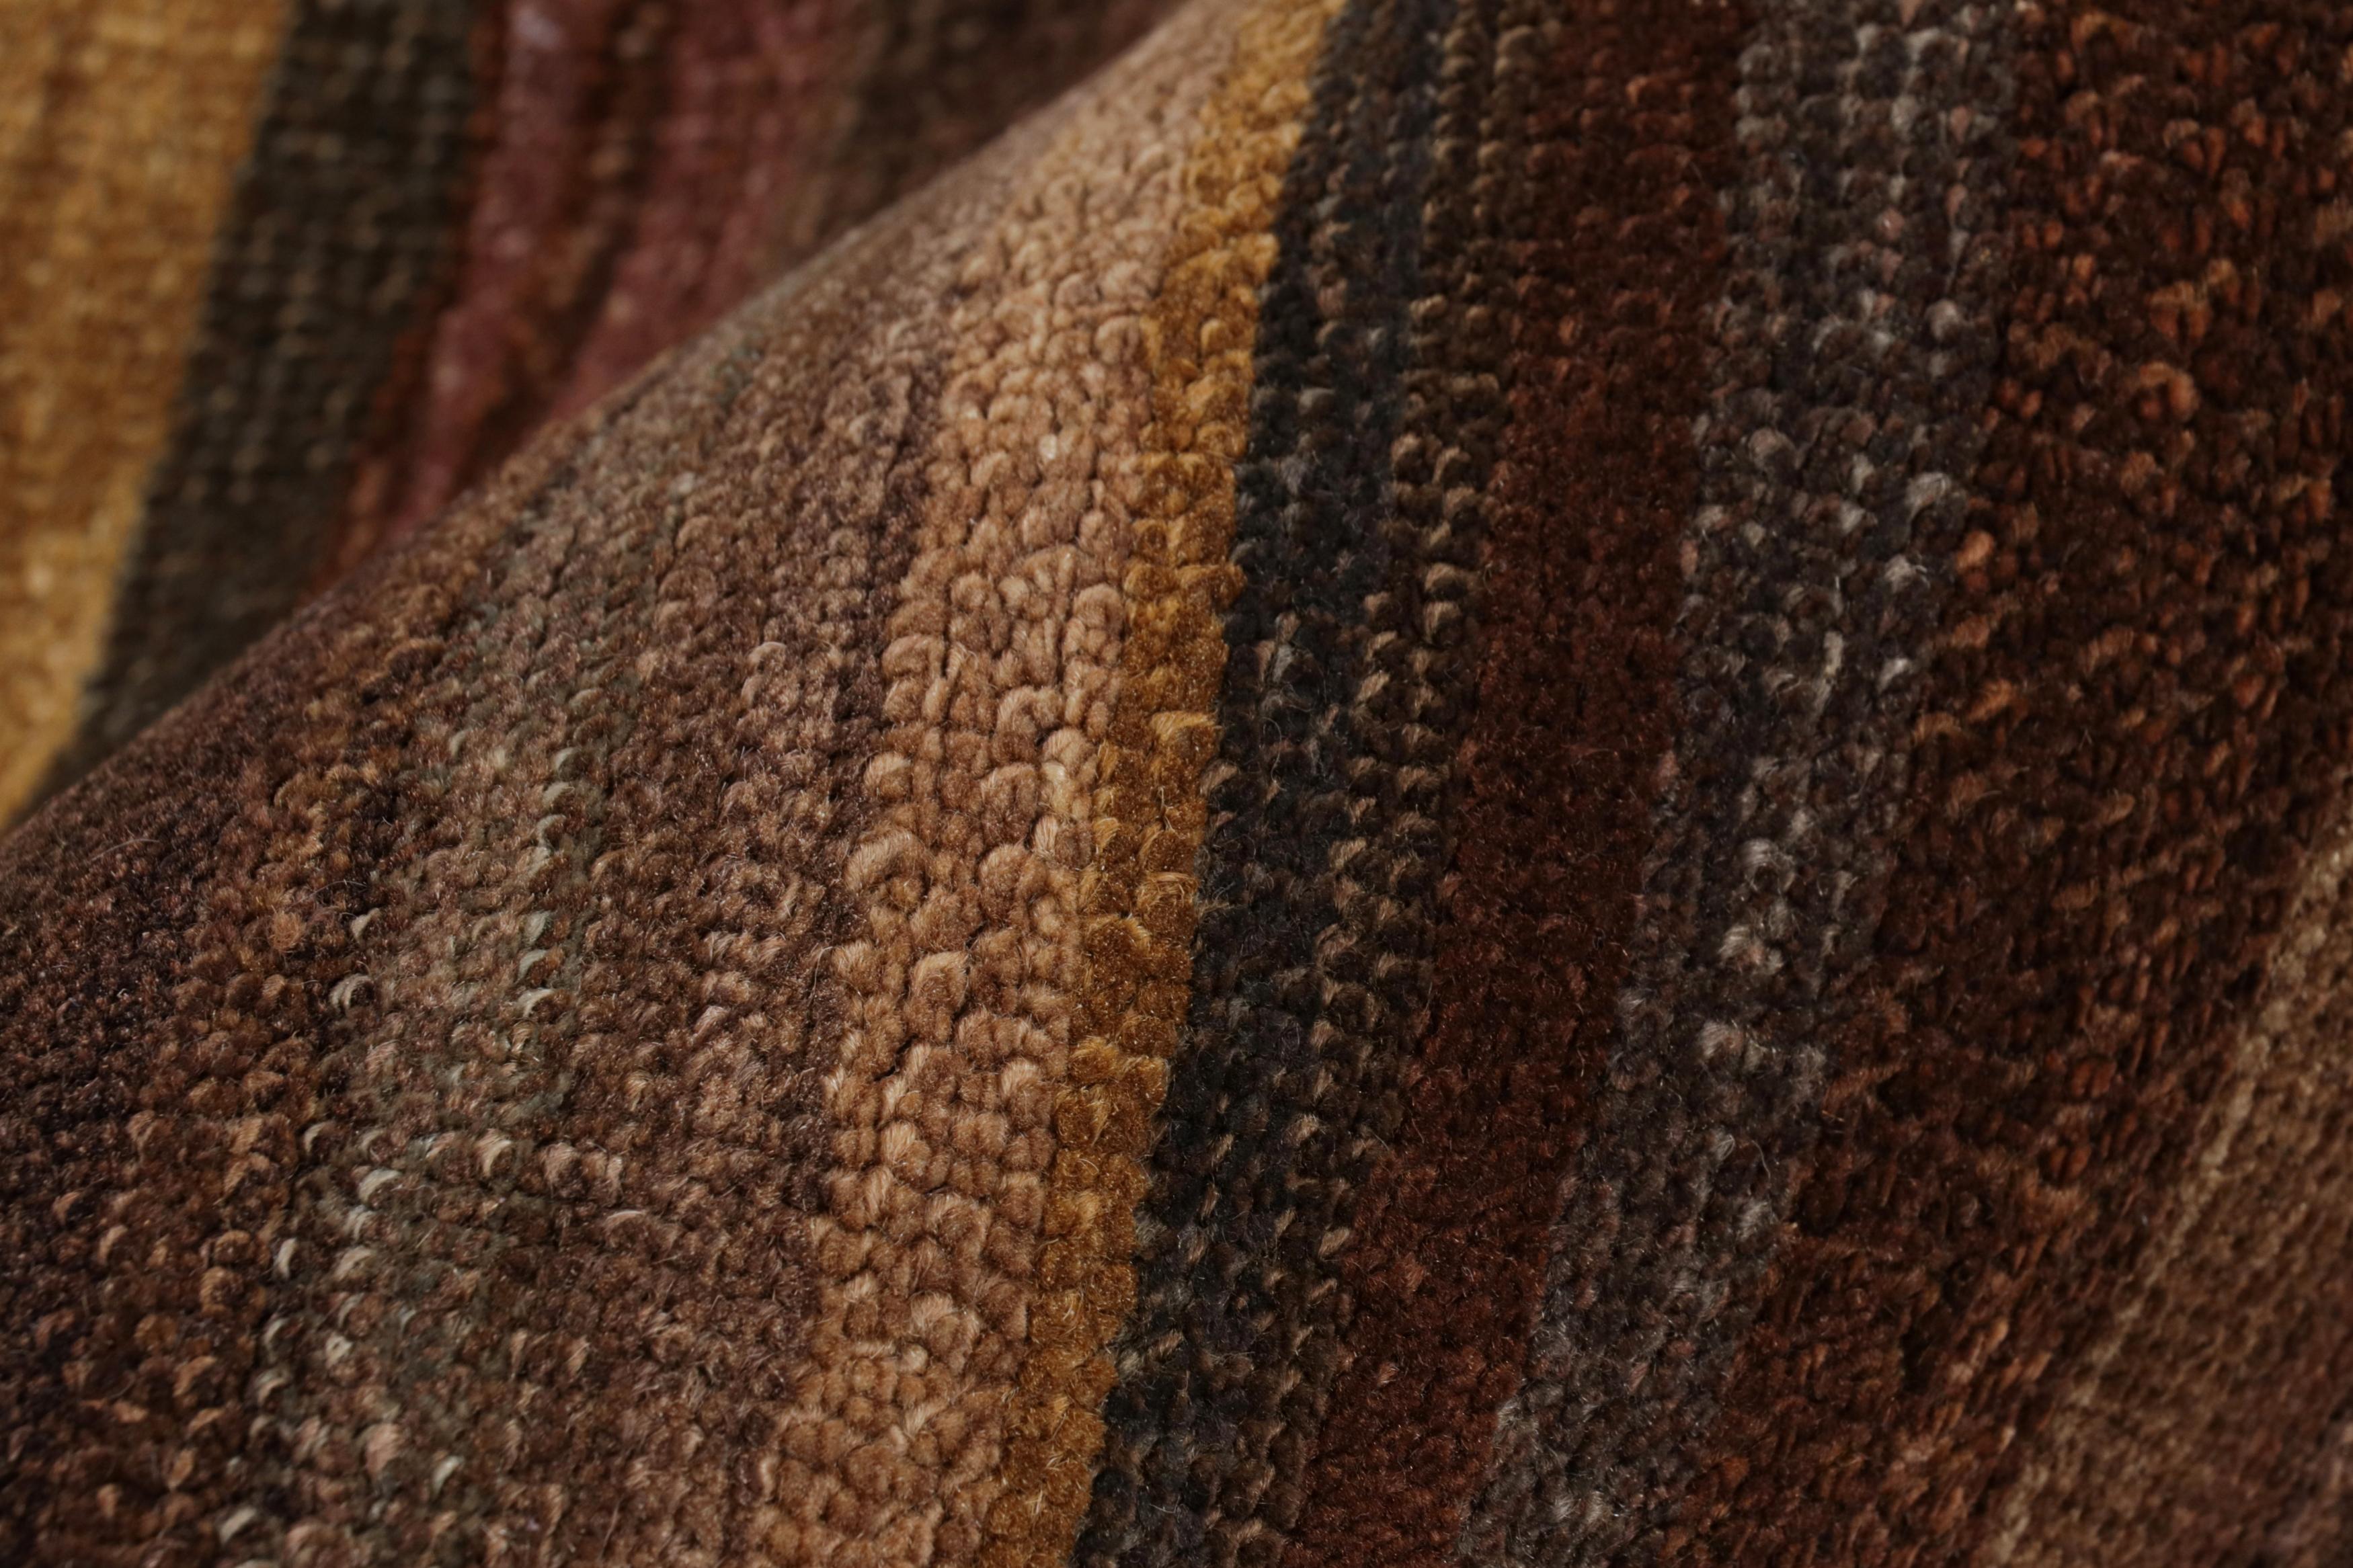 Rug & Kilim’s Modern Textural Rug in Rich Brown Stripes and Umber Tones